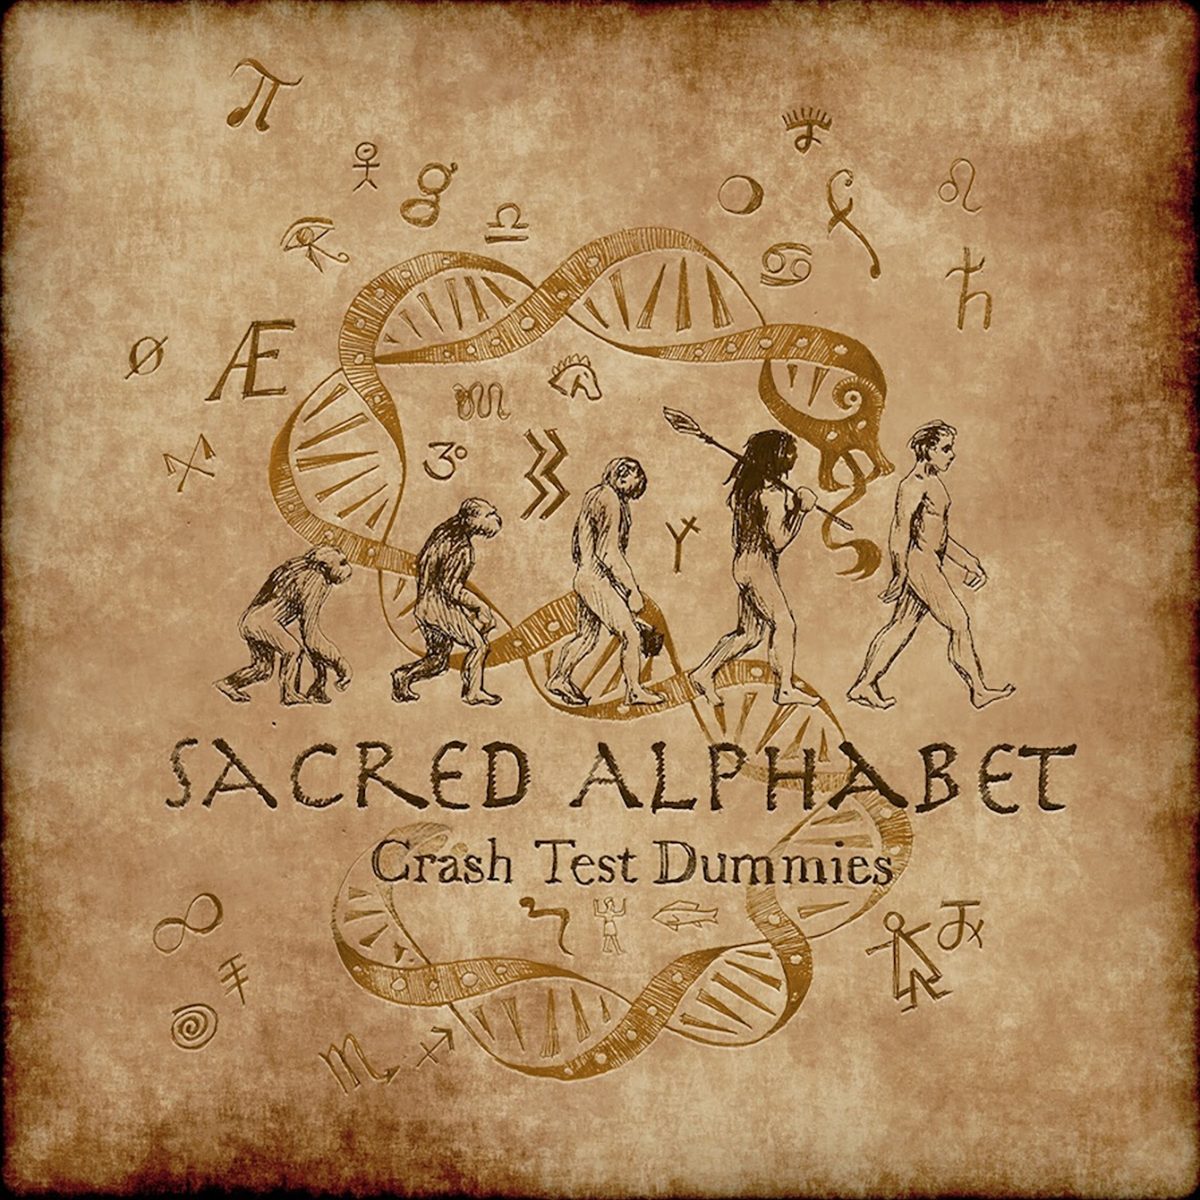 Crash Test Dummies Return With Brand New Single “Sacred Alphabet”